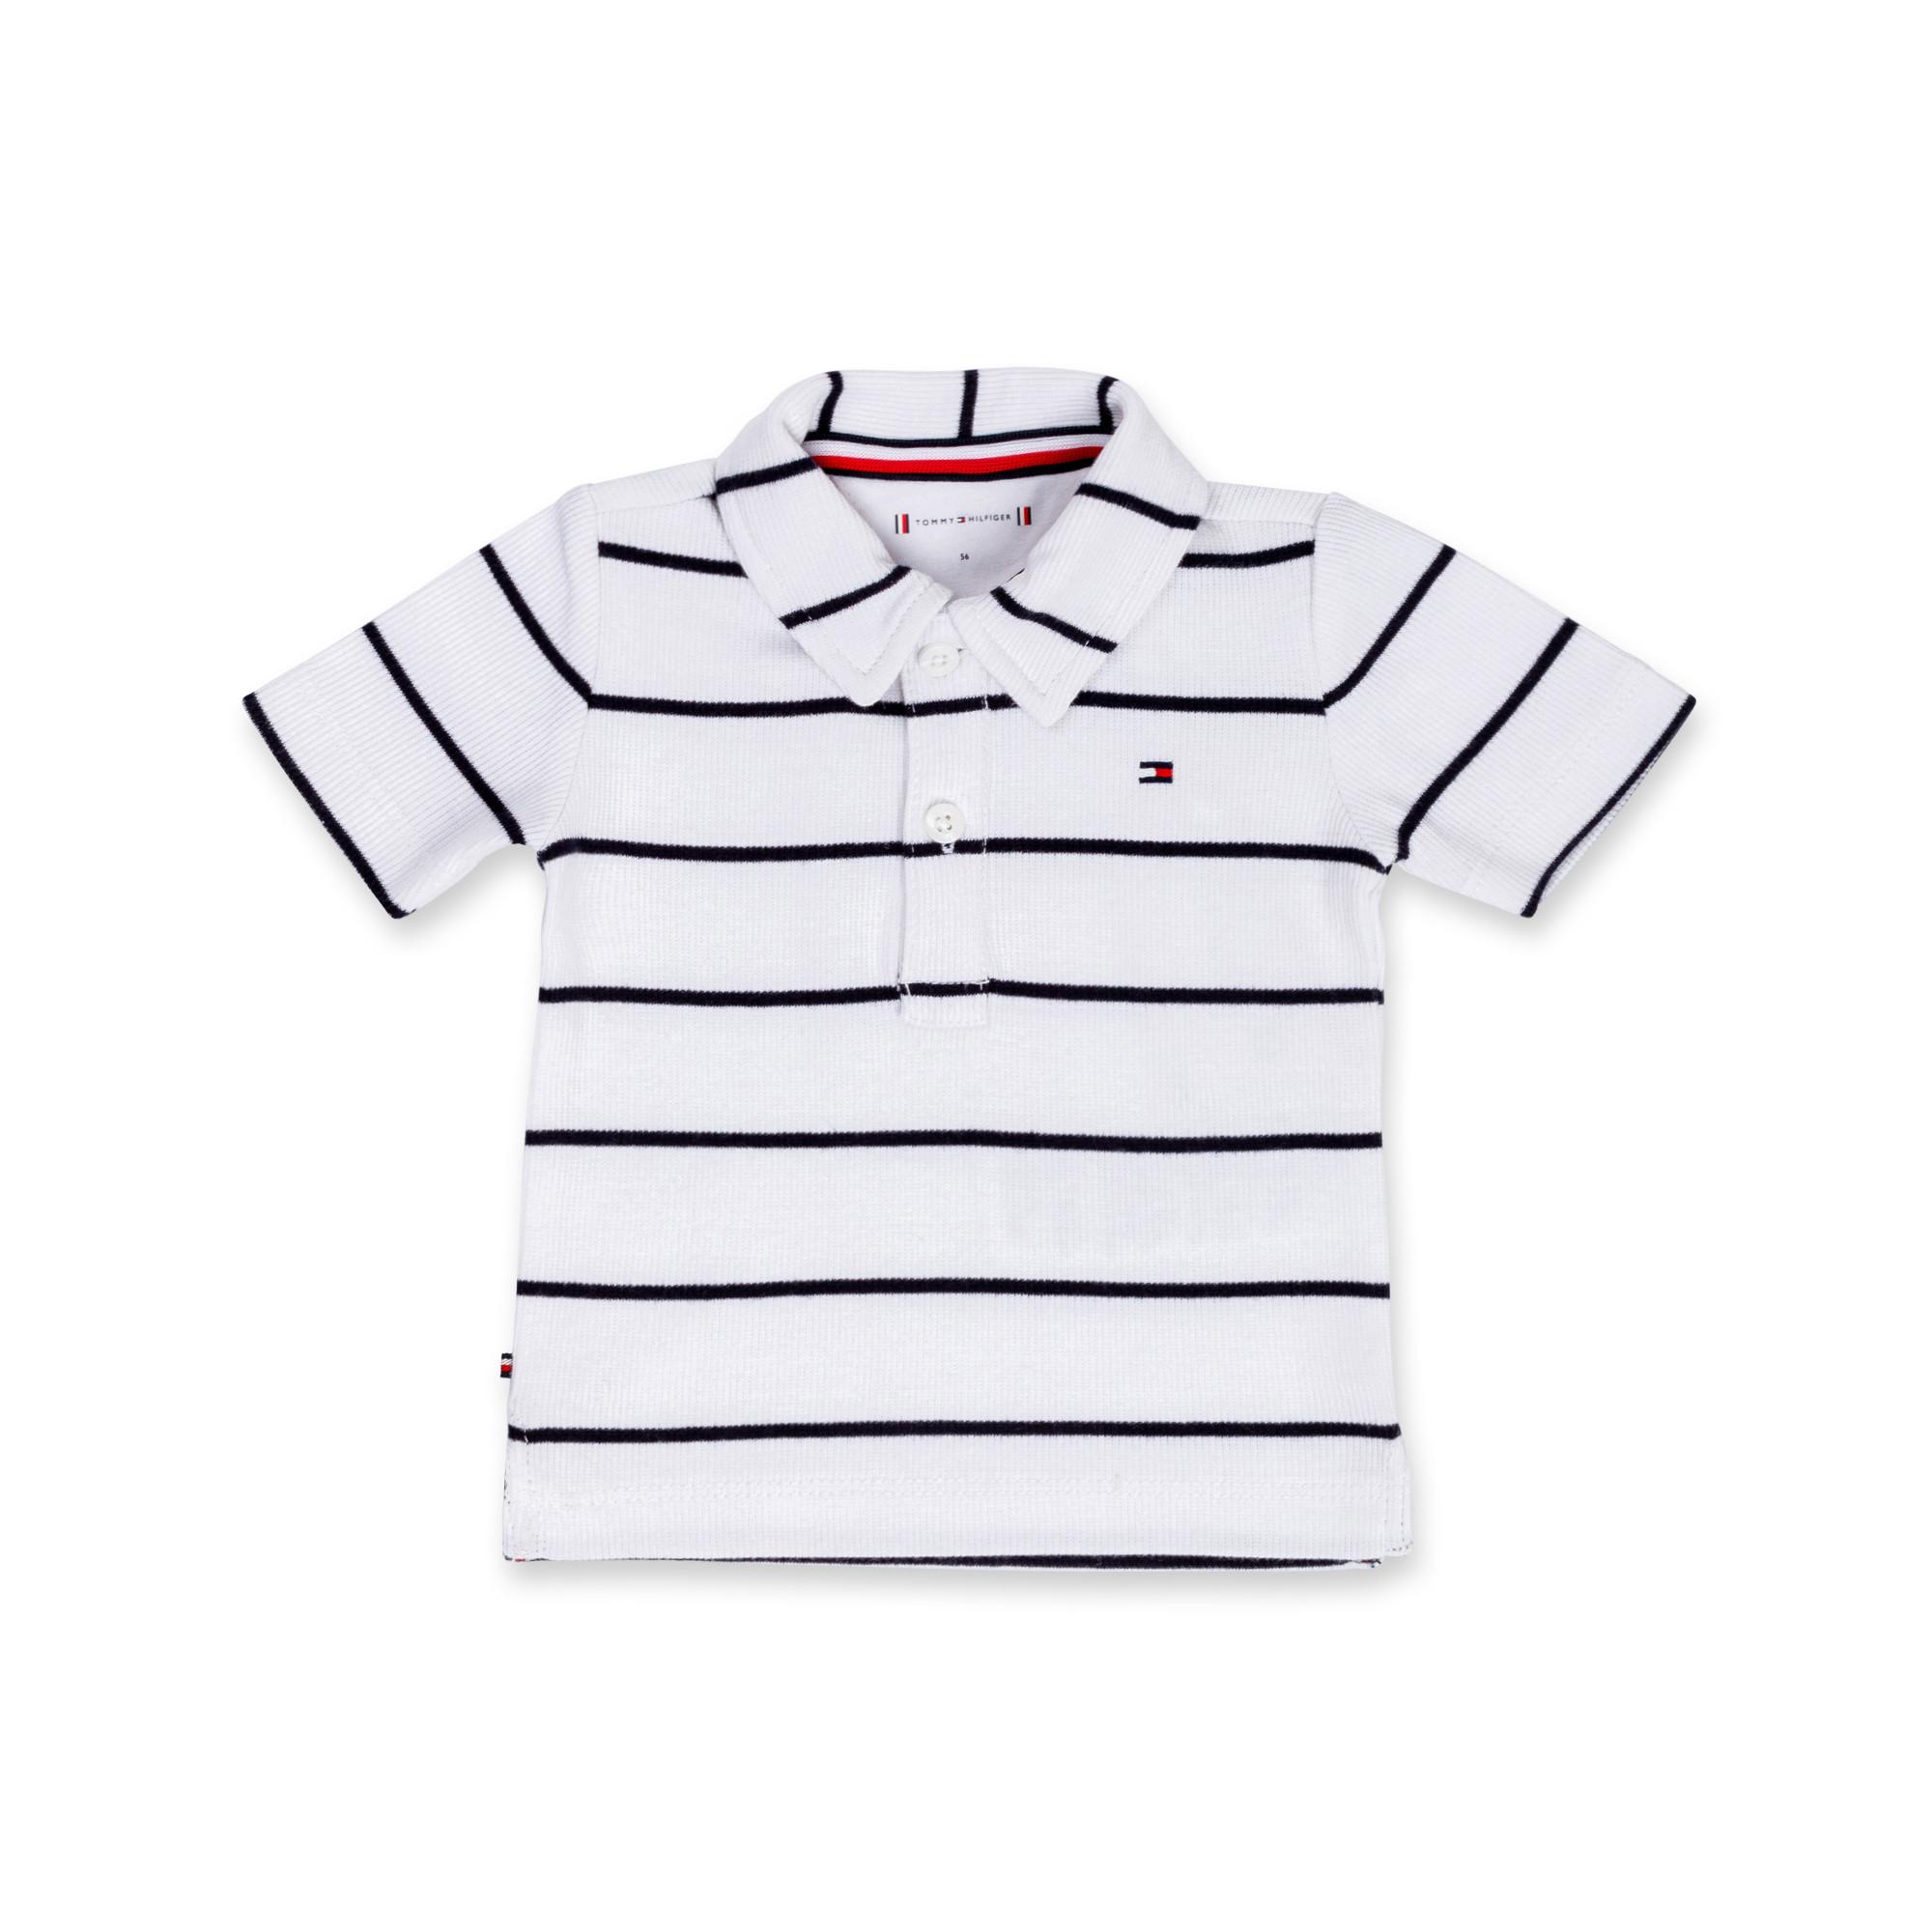 TOMMY HILFIGER BABY STRIPED RIB POLO S/S Polo Shirt 